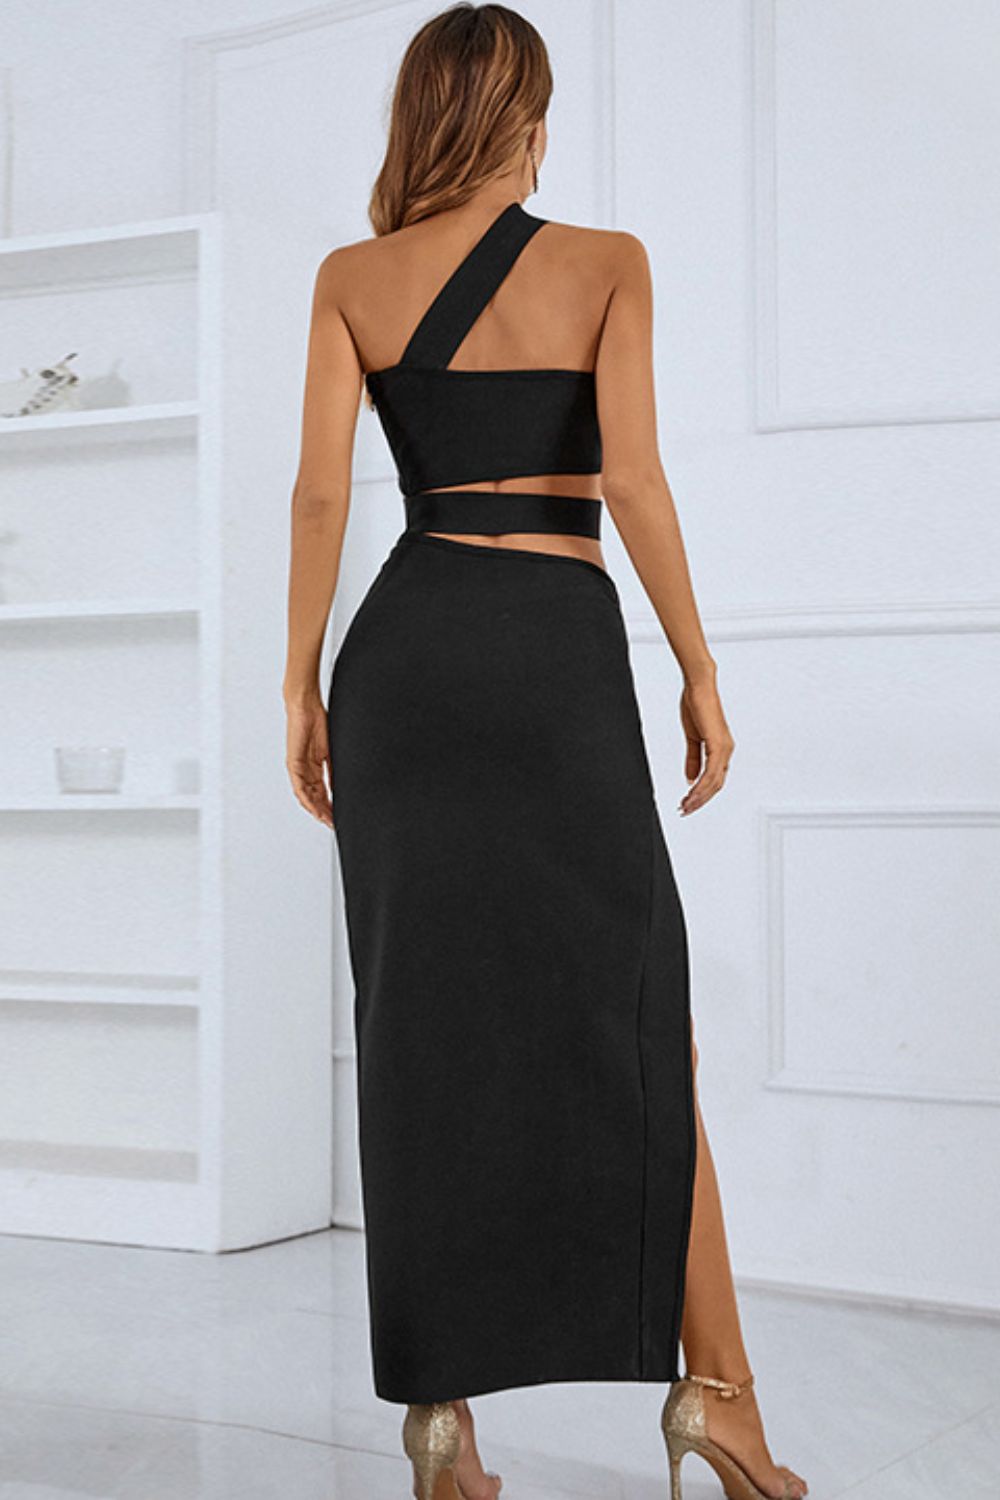 Elegant Black Tie Summer Attire: One-Shoulder Cutout Front Split Maxi Dress, Perfect Wedding Guest Dress for Sophisticated Affairs